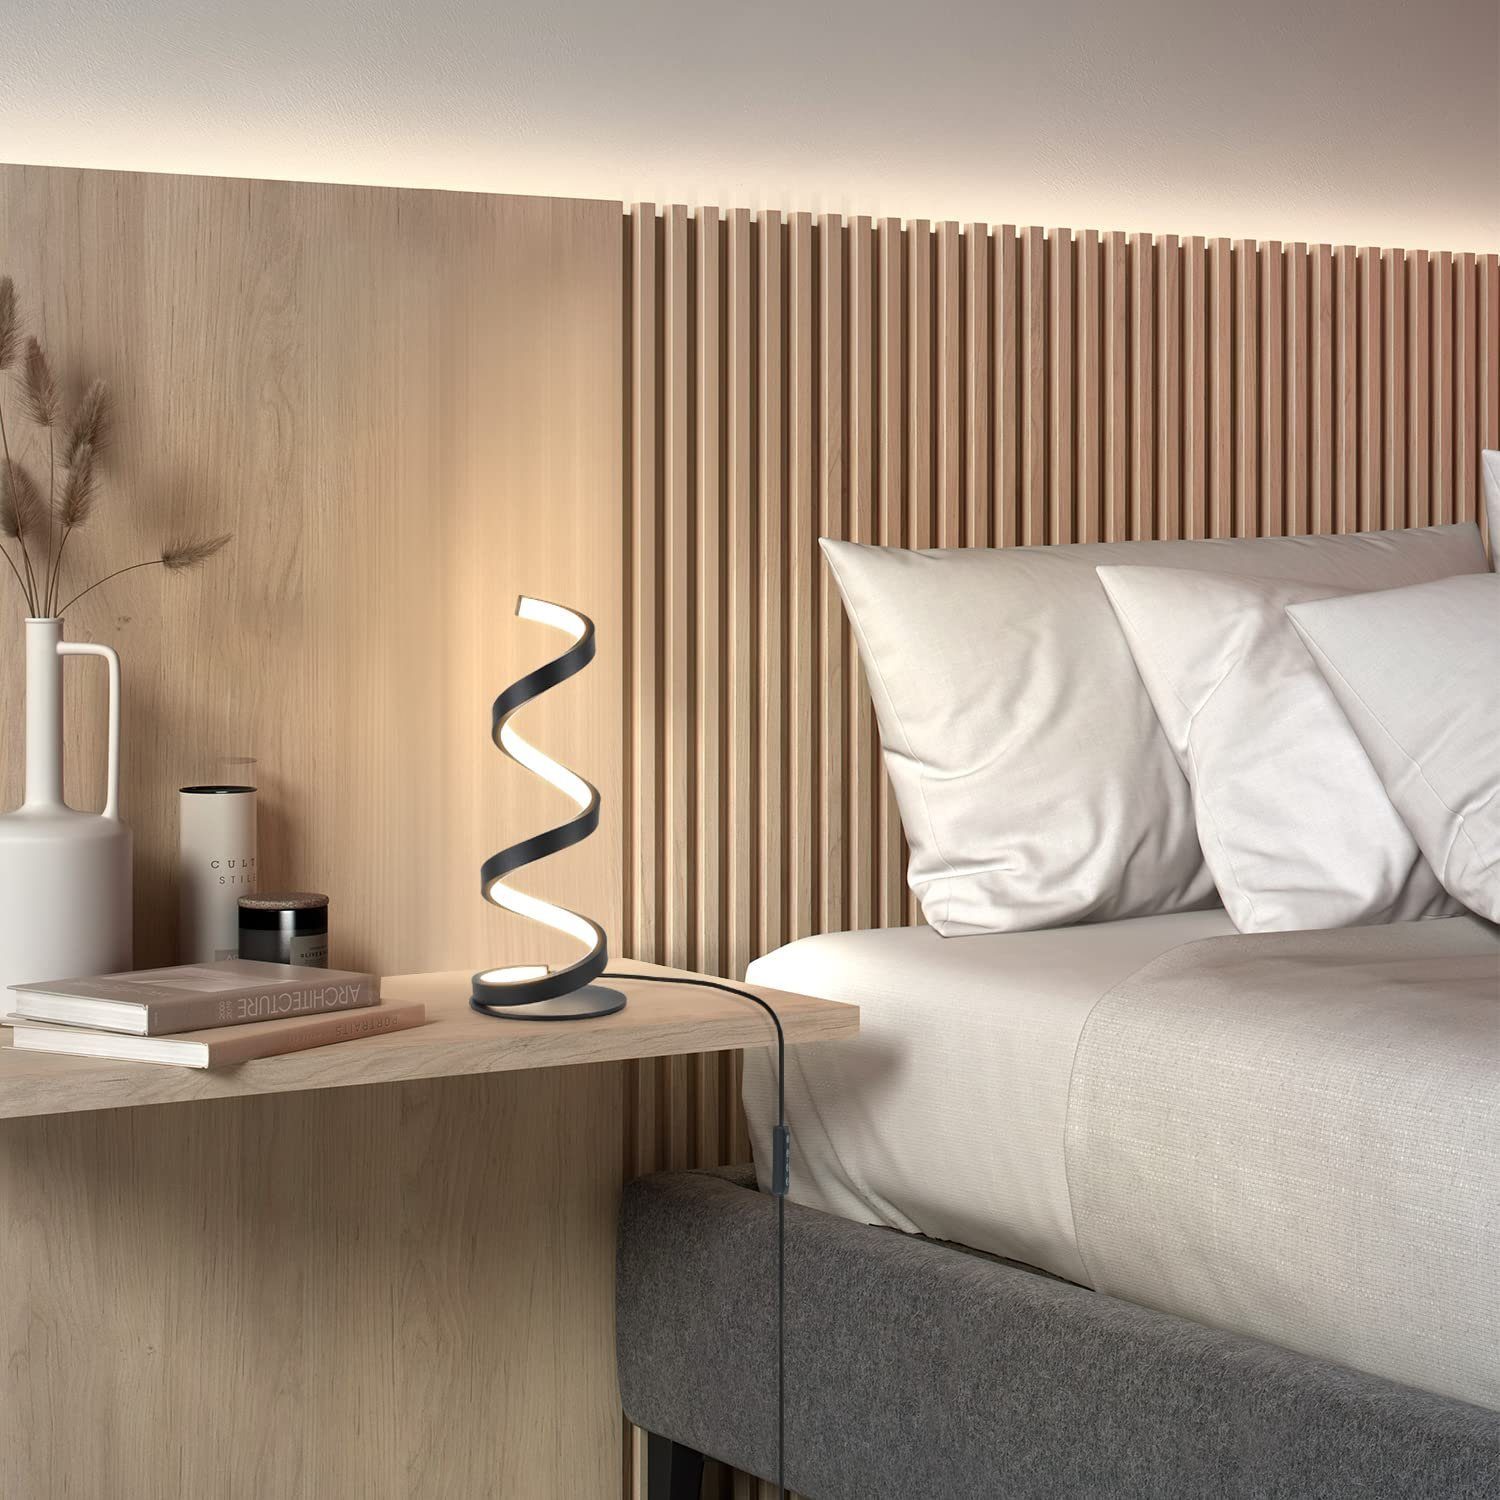 ZMH LED Tischleuchte Dimmbar Spiral Schlaf- Metall Kinderzimmer, fest Wohn- Schwarz 10W integriert, dimmerbar, Design LED modern